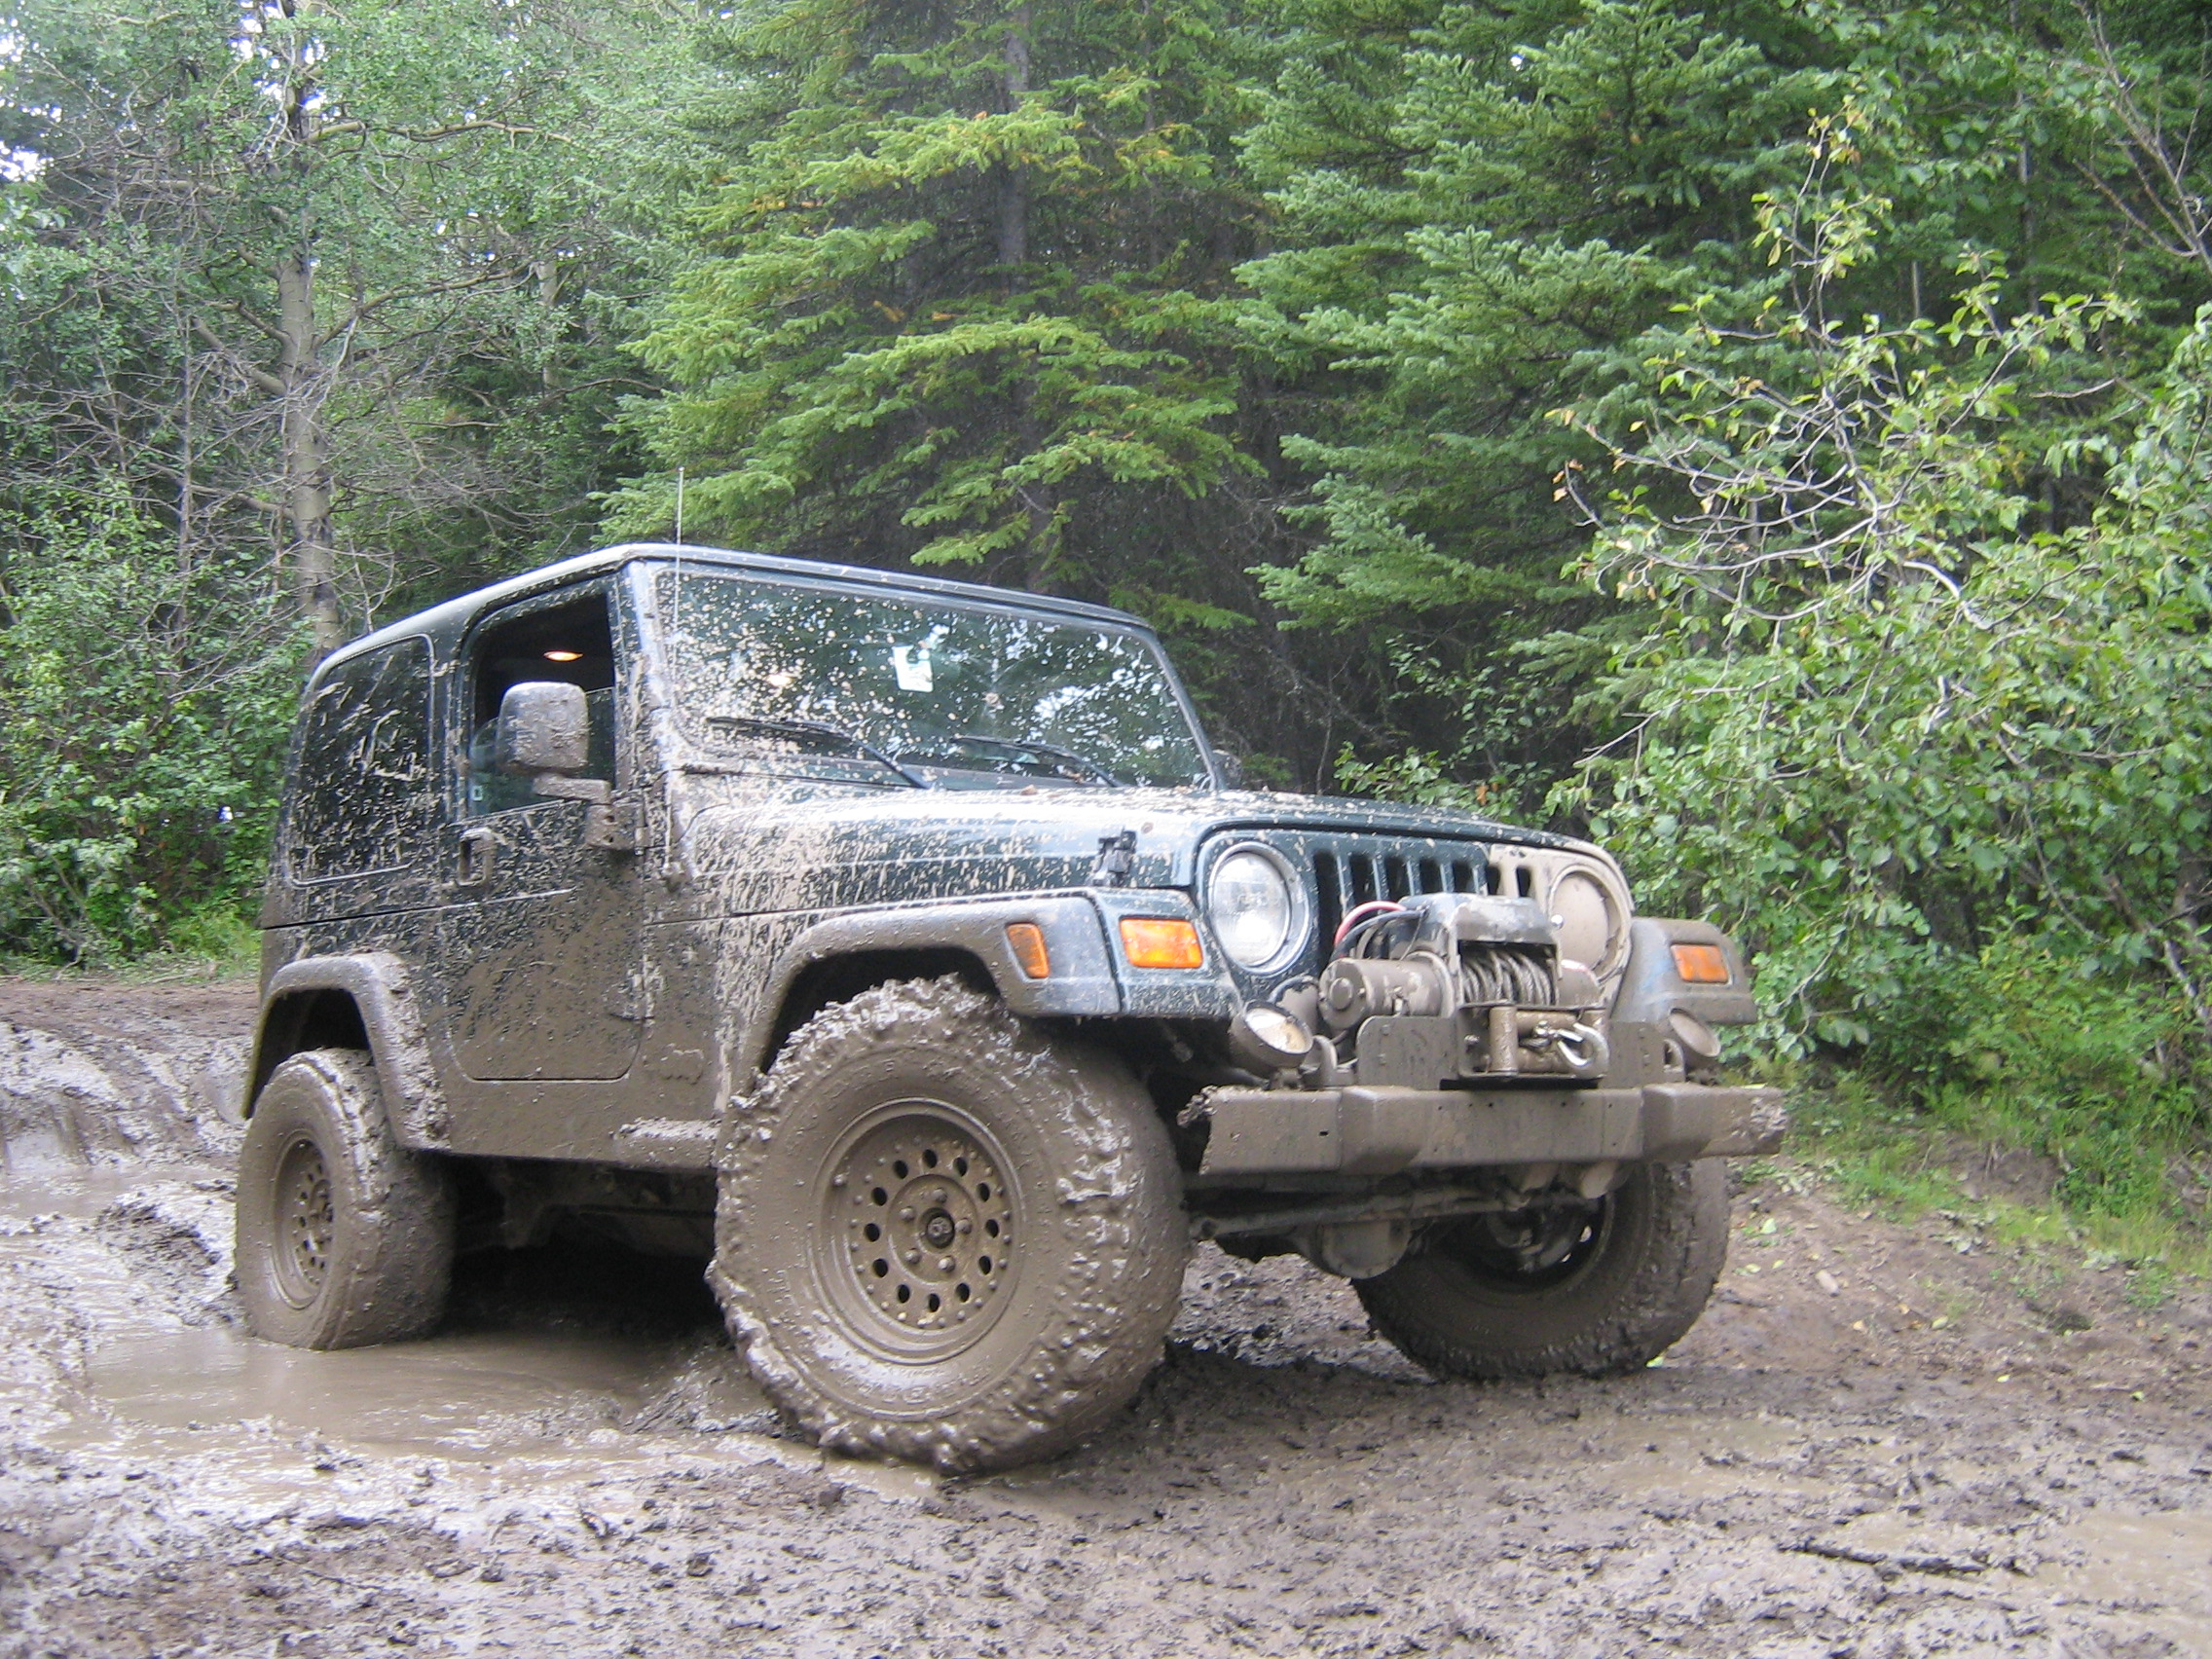 File:Jeep Wrangler in mud (2820337718).jpg - Wikimedia Commons